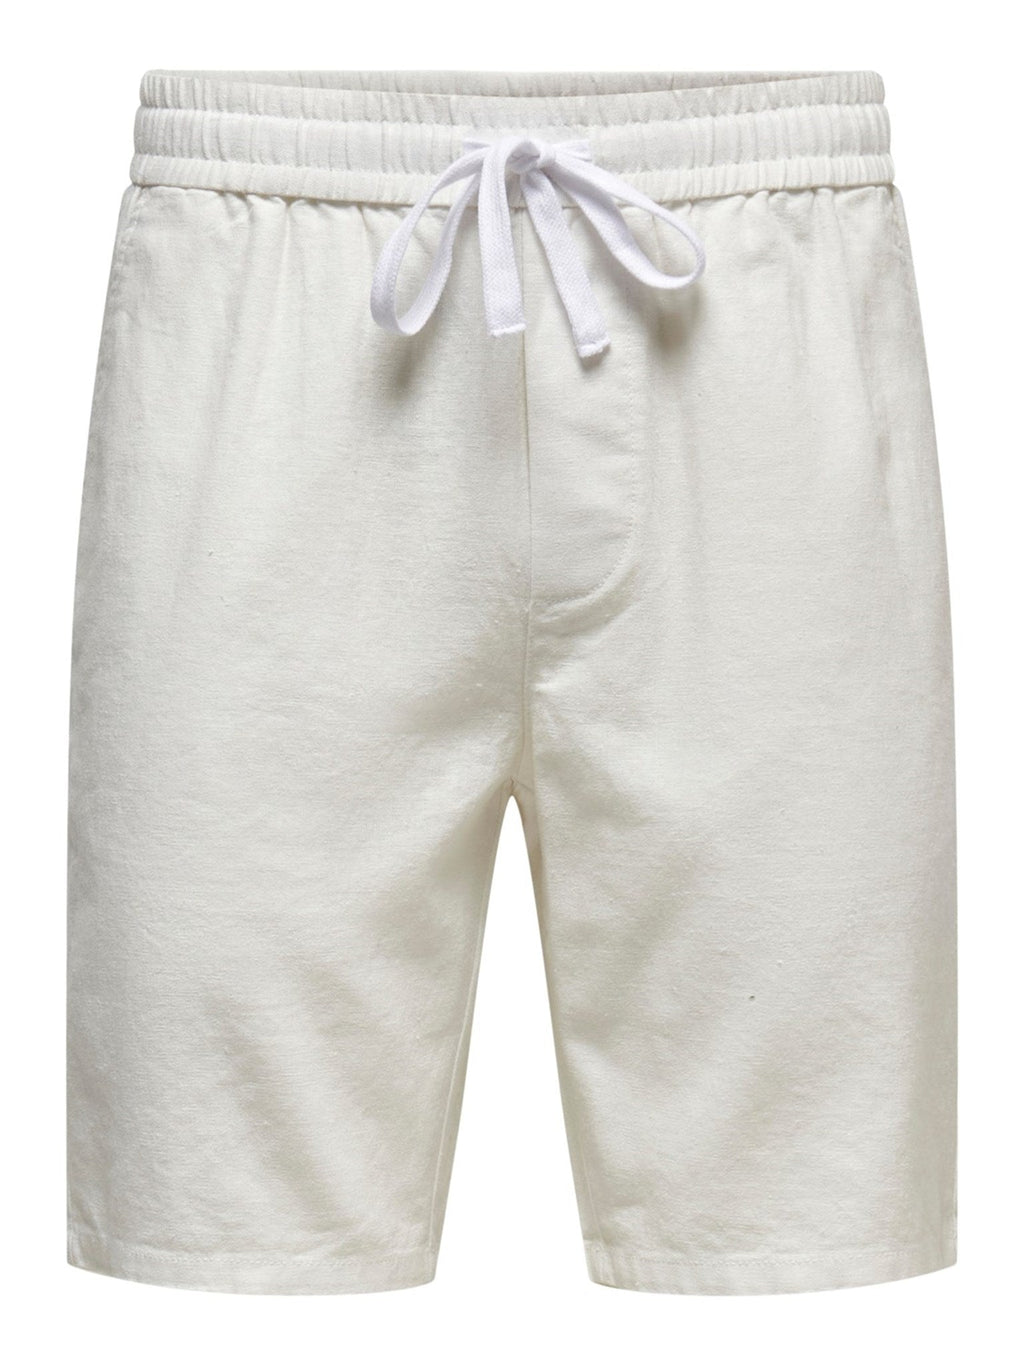 Shorts en lin Linus - blanc brillant